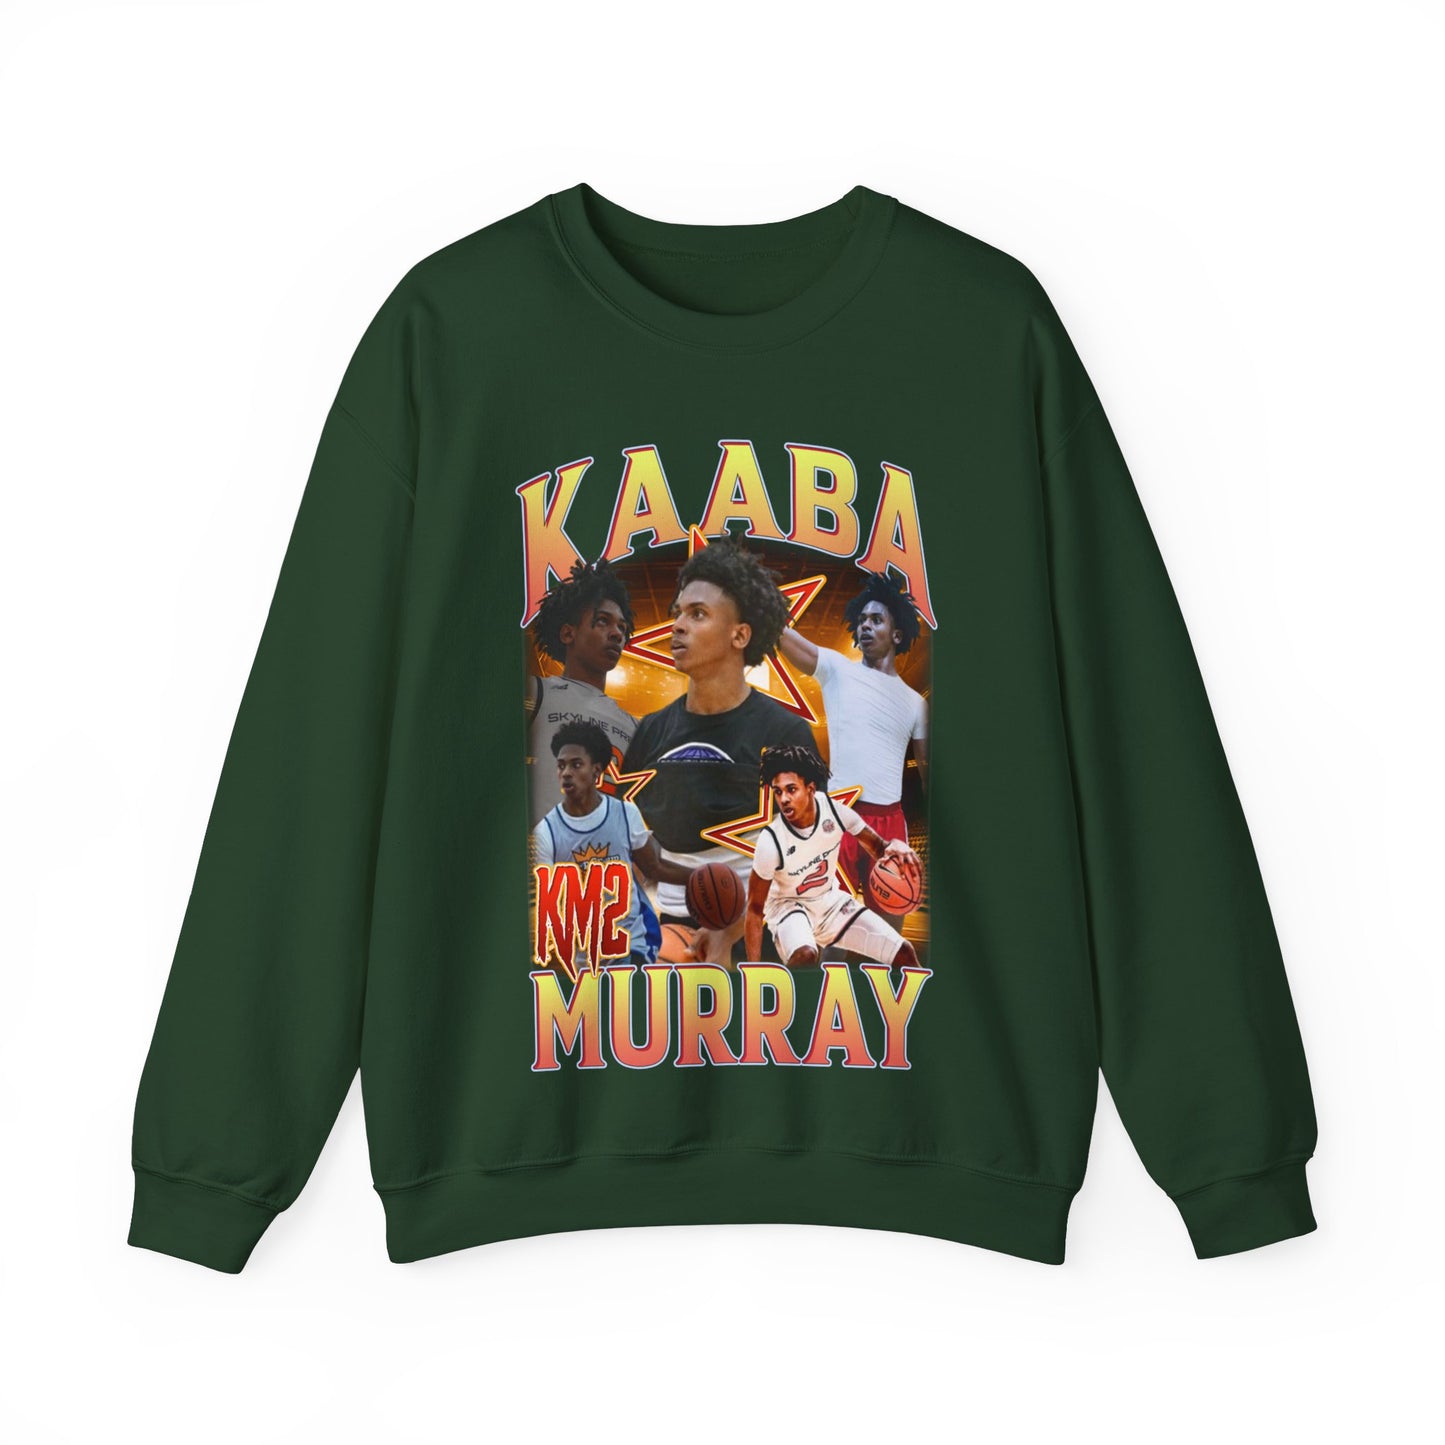 Kaaba Murray Crewneck Sweatshirt